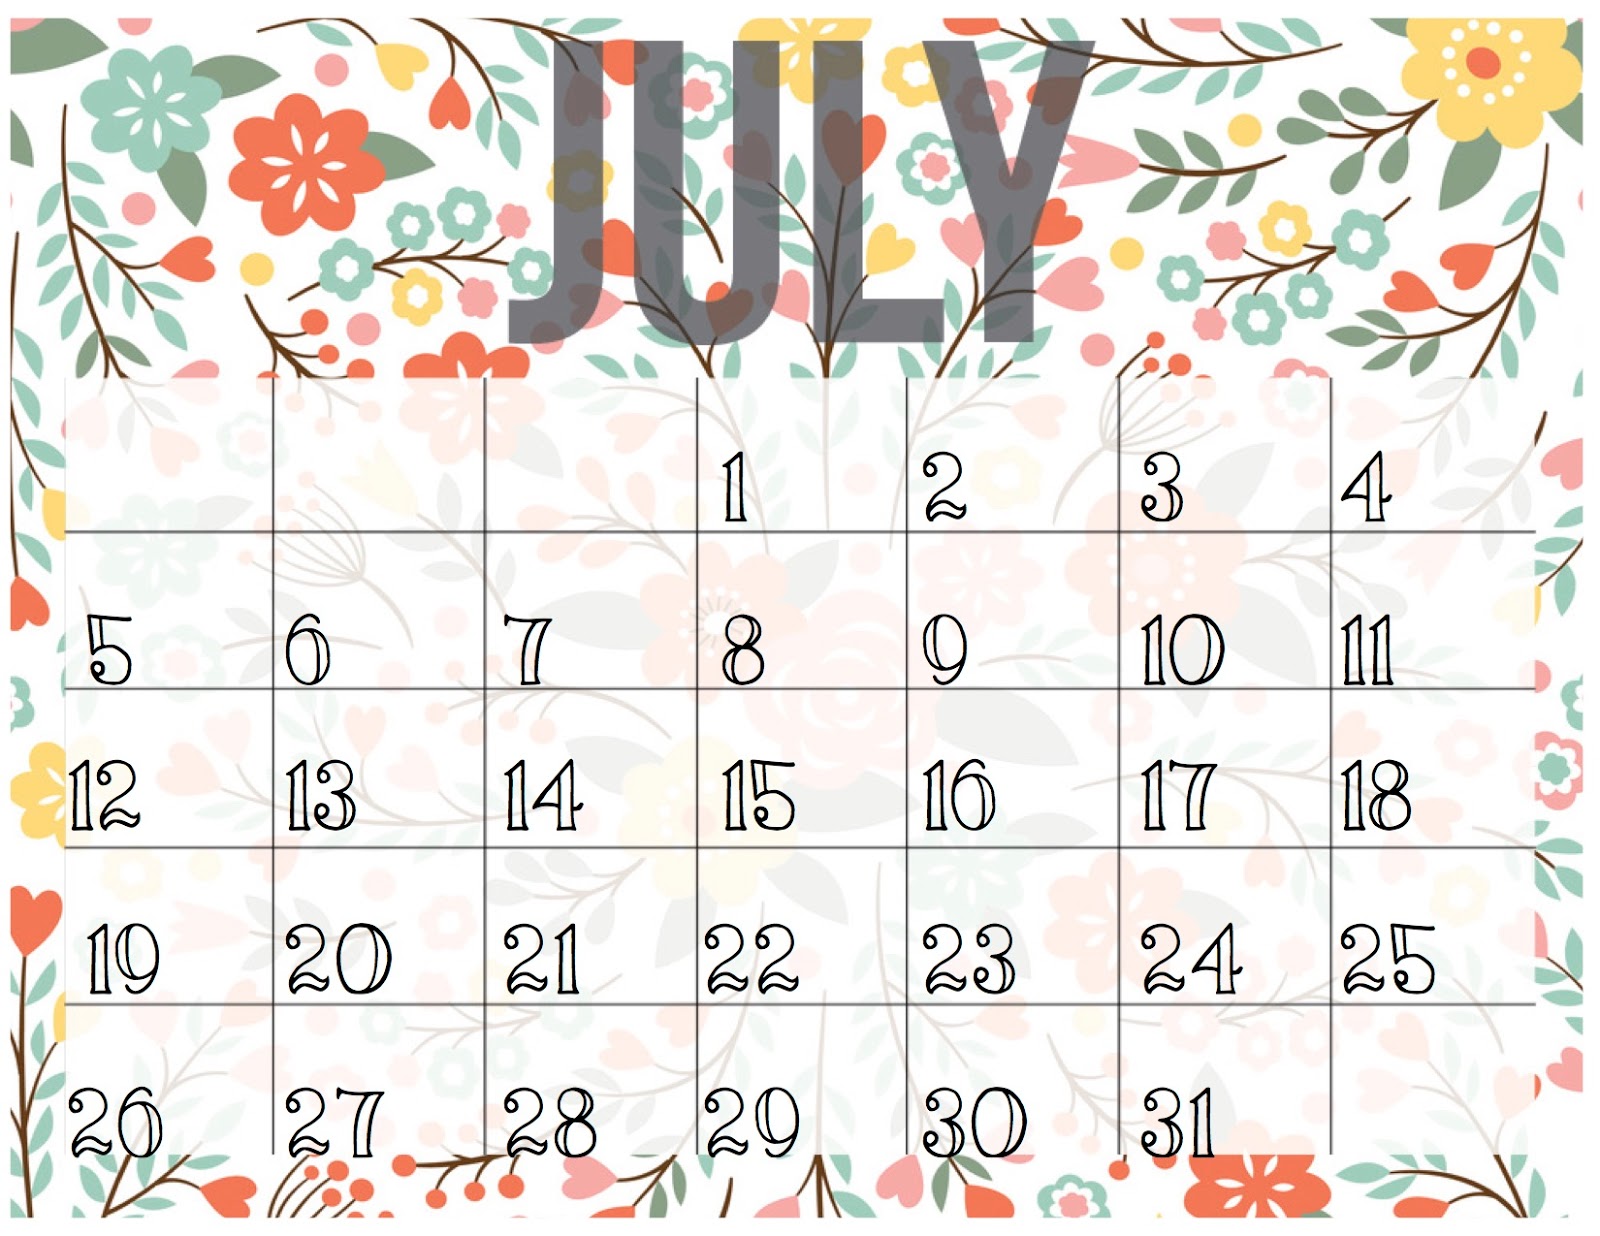 July 2017 Calendar Cute | weekly calendar template